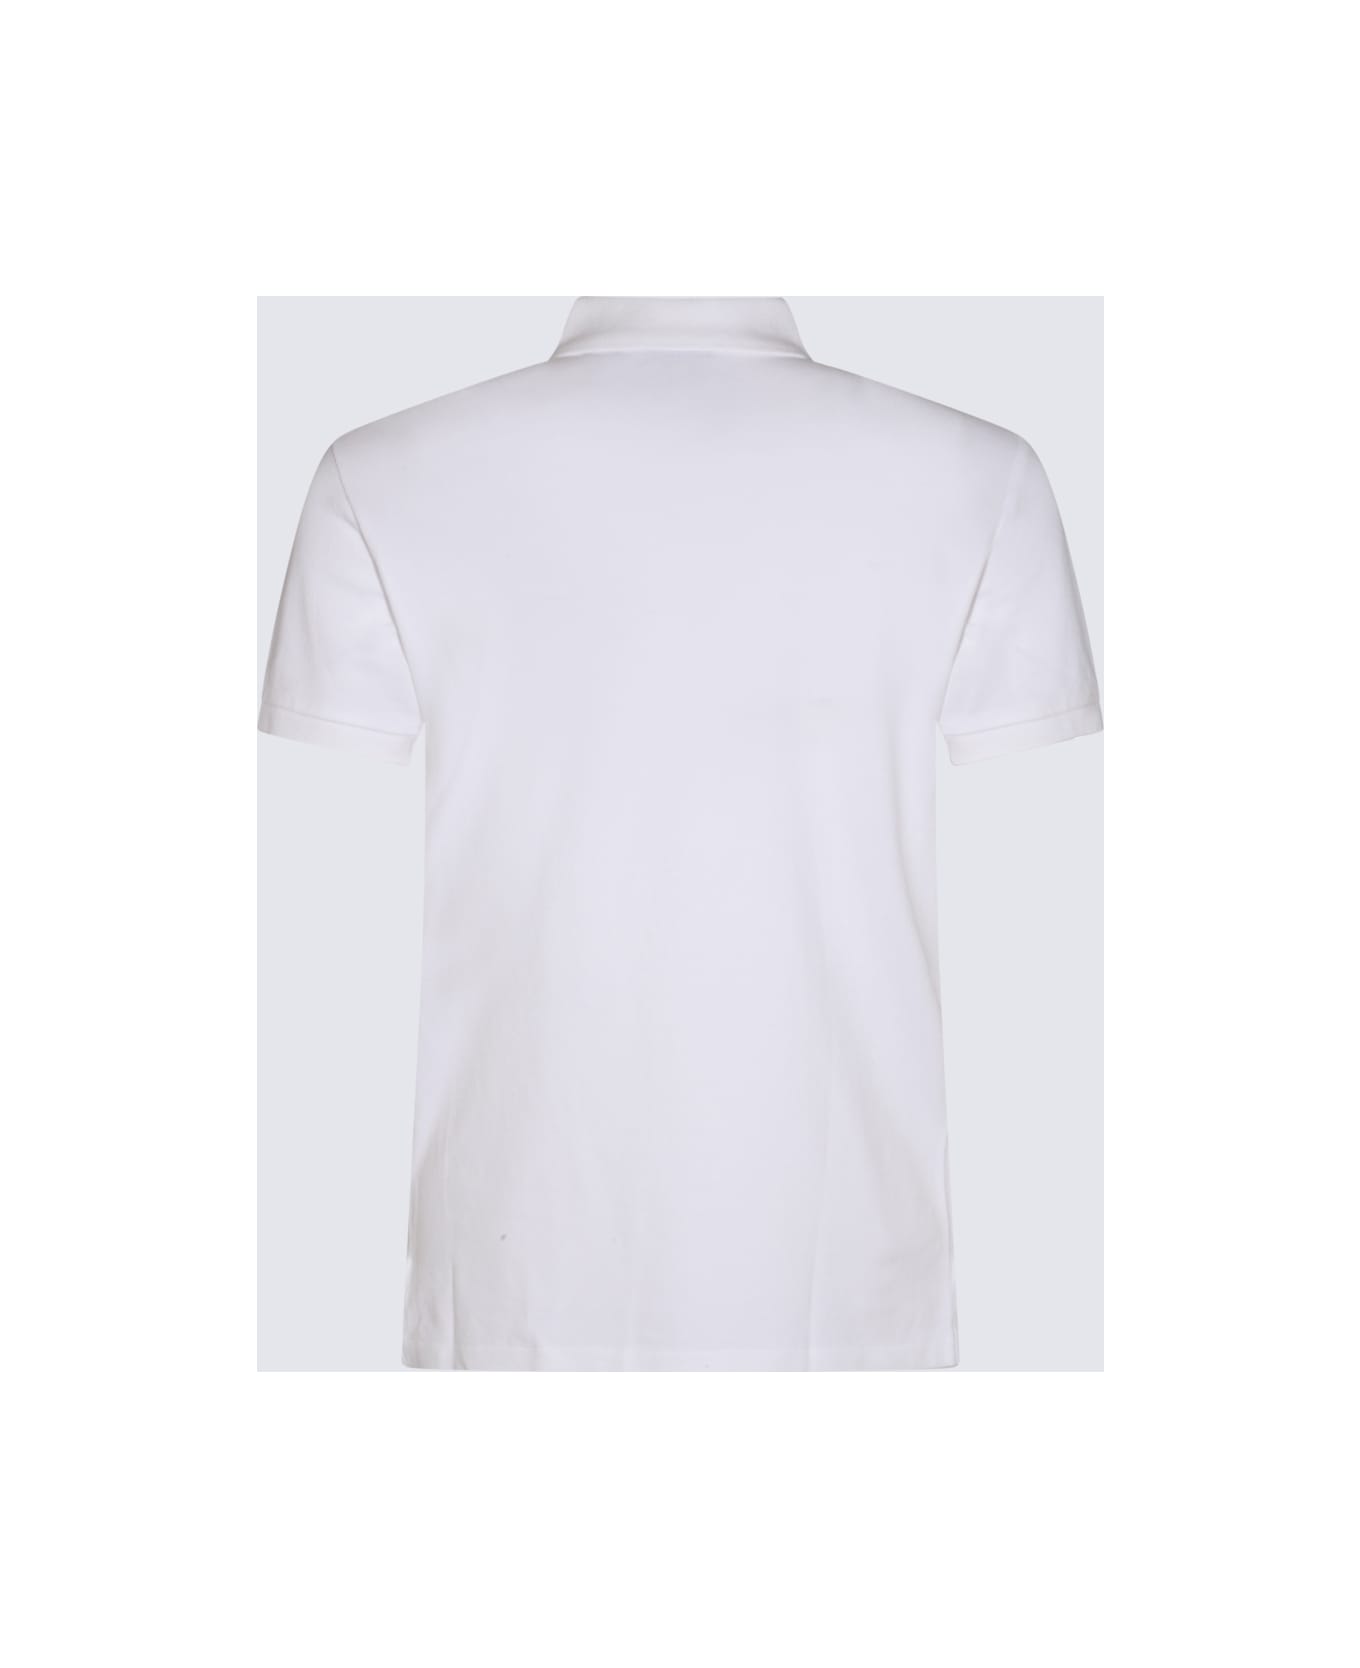 Polo Ralph Lauren White And Blue Cotton Polo Shirt - White ポロシャツ